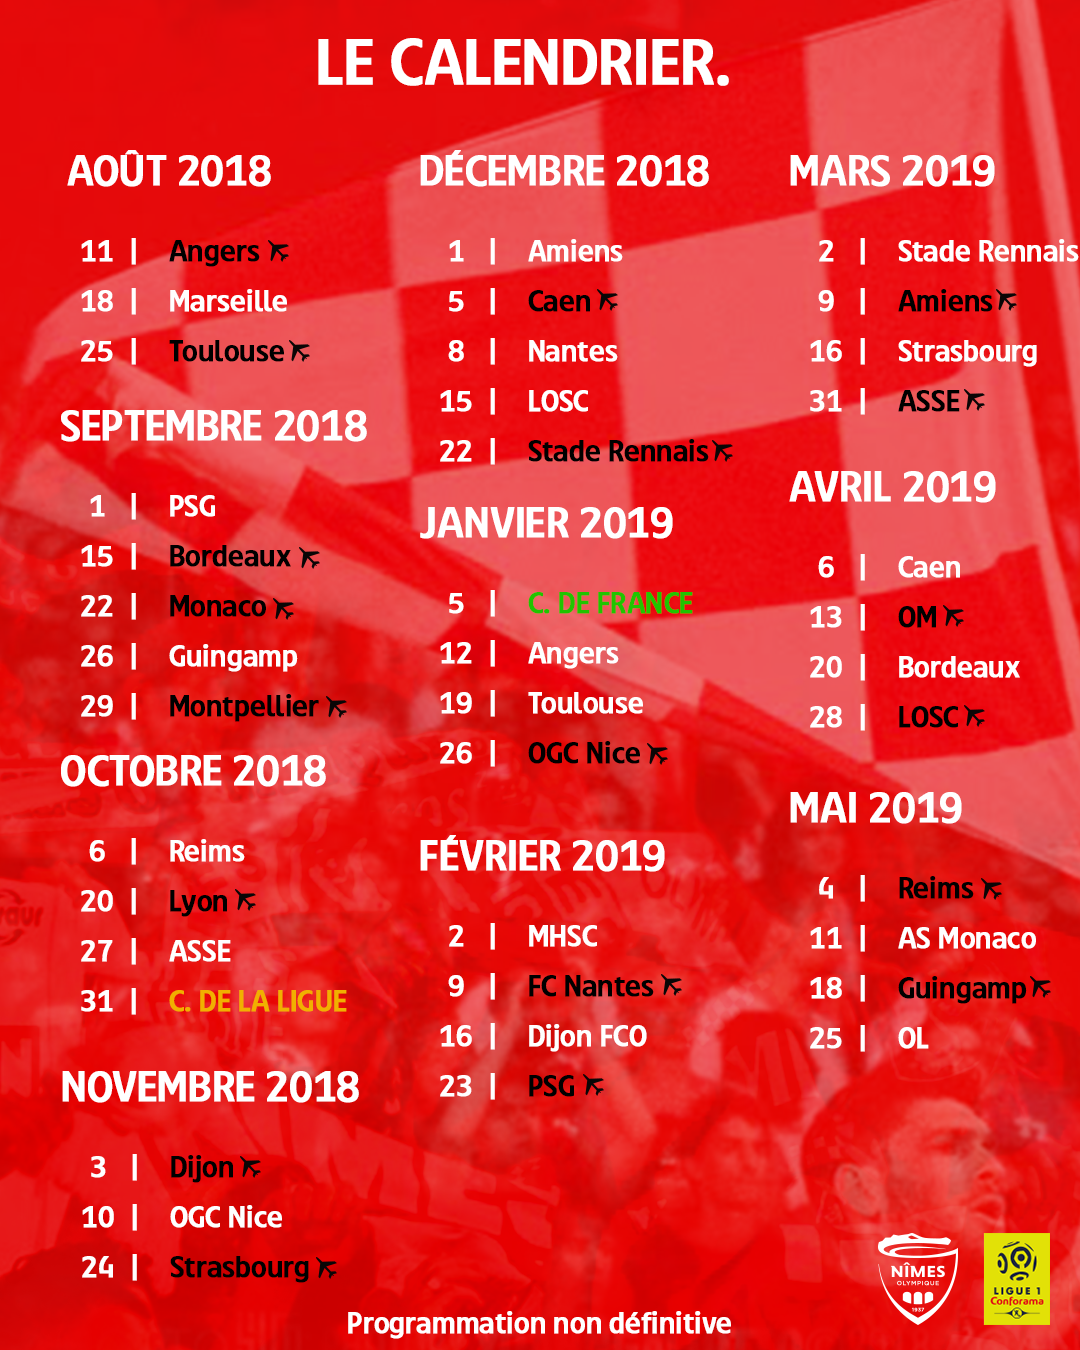 Nîmes Olympique | Le calendrier complet - Nîmes Olympique